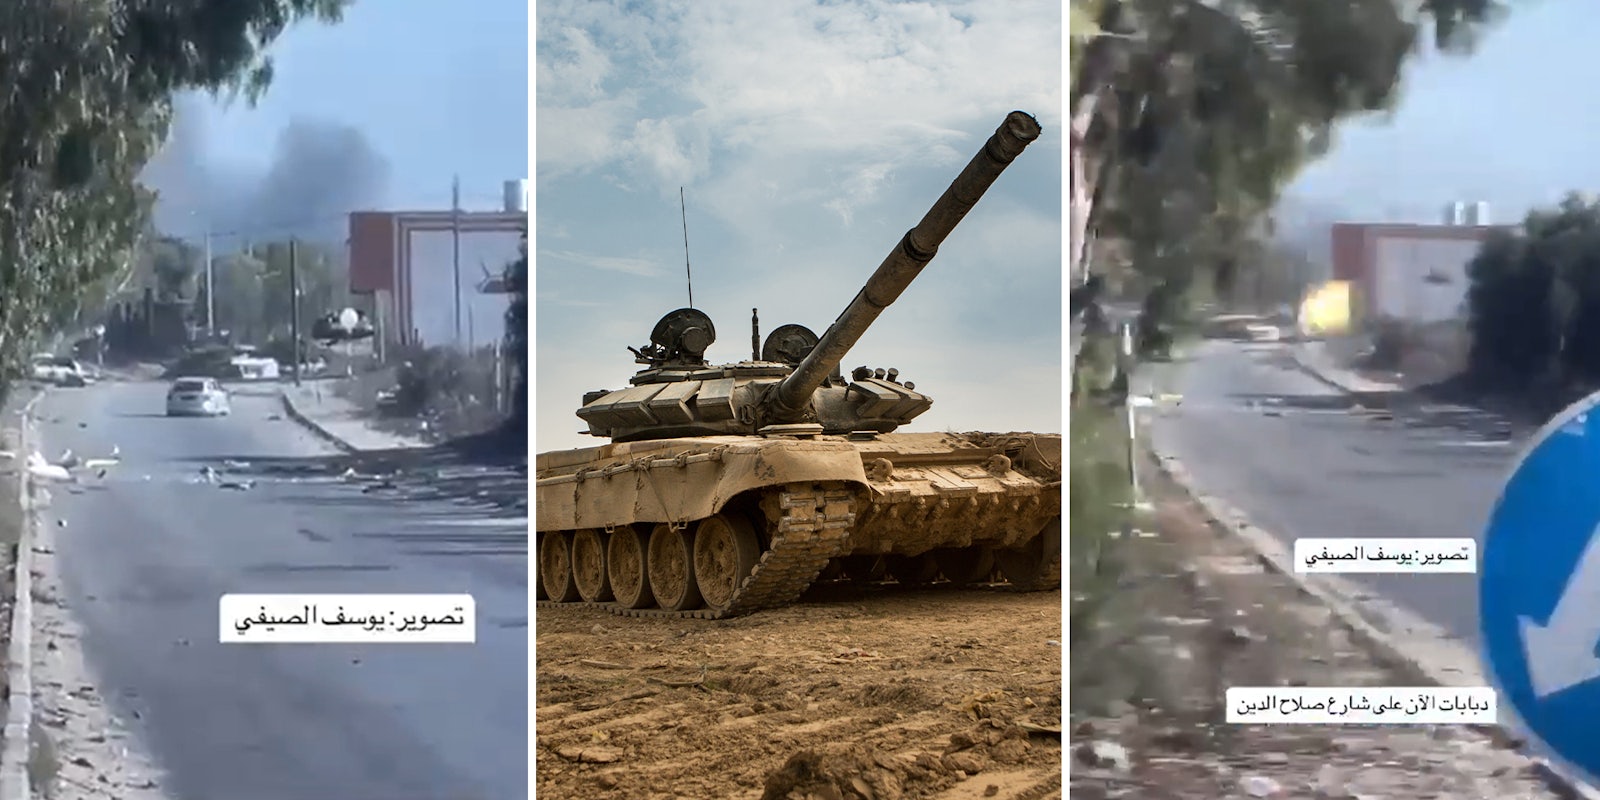 Viral vid shows tank shoot car in Palestine